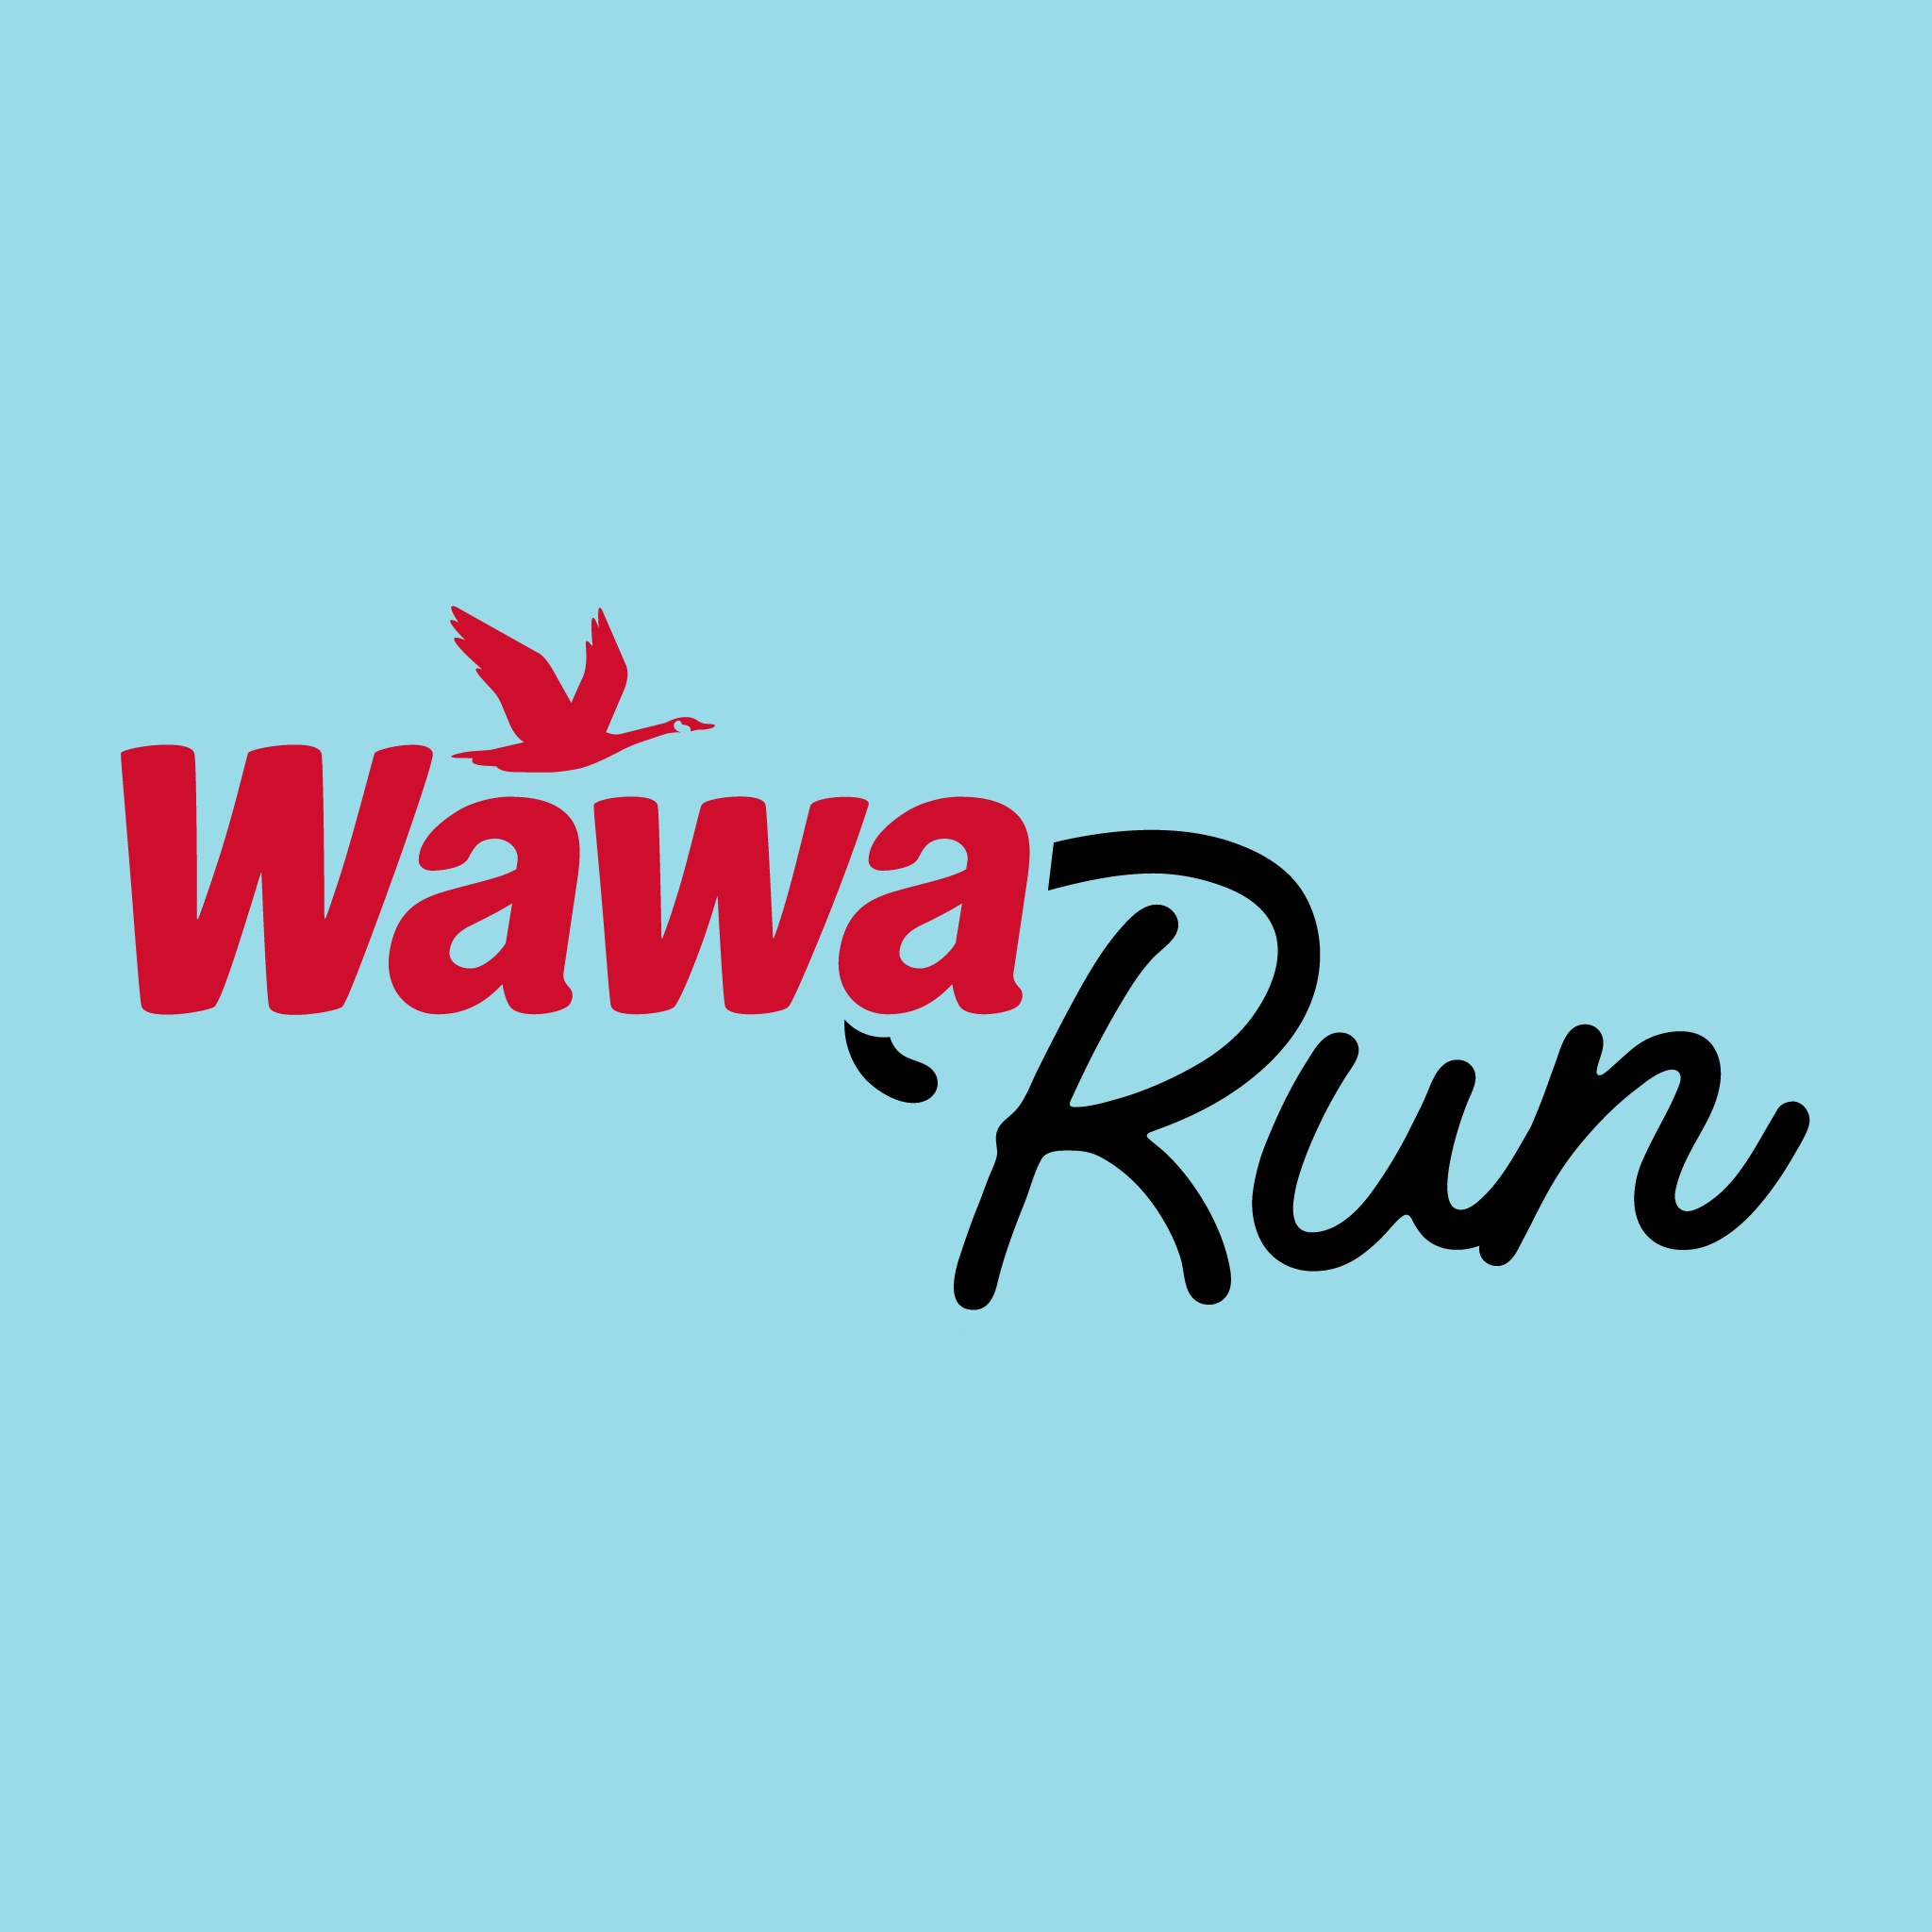 Company logo of Wawa